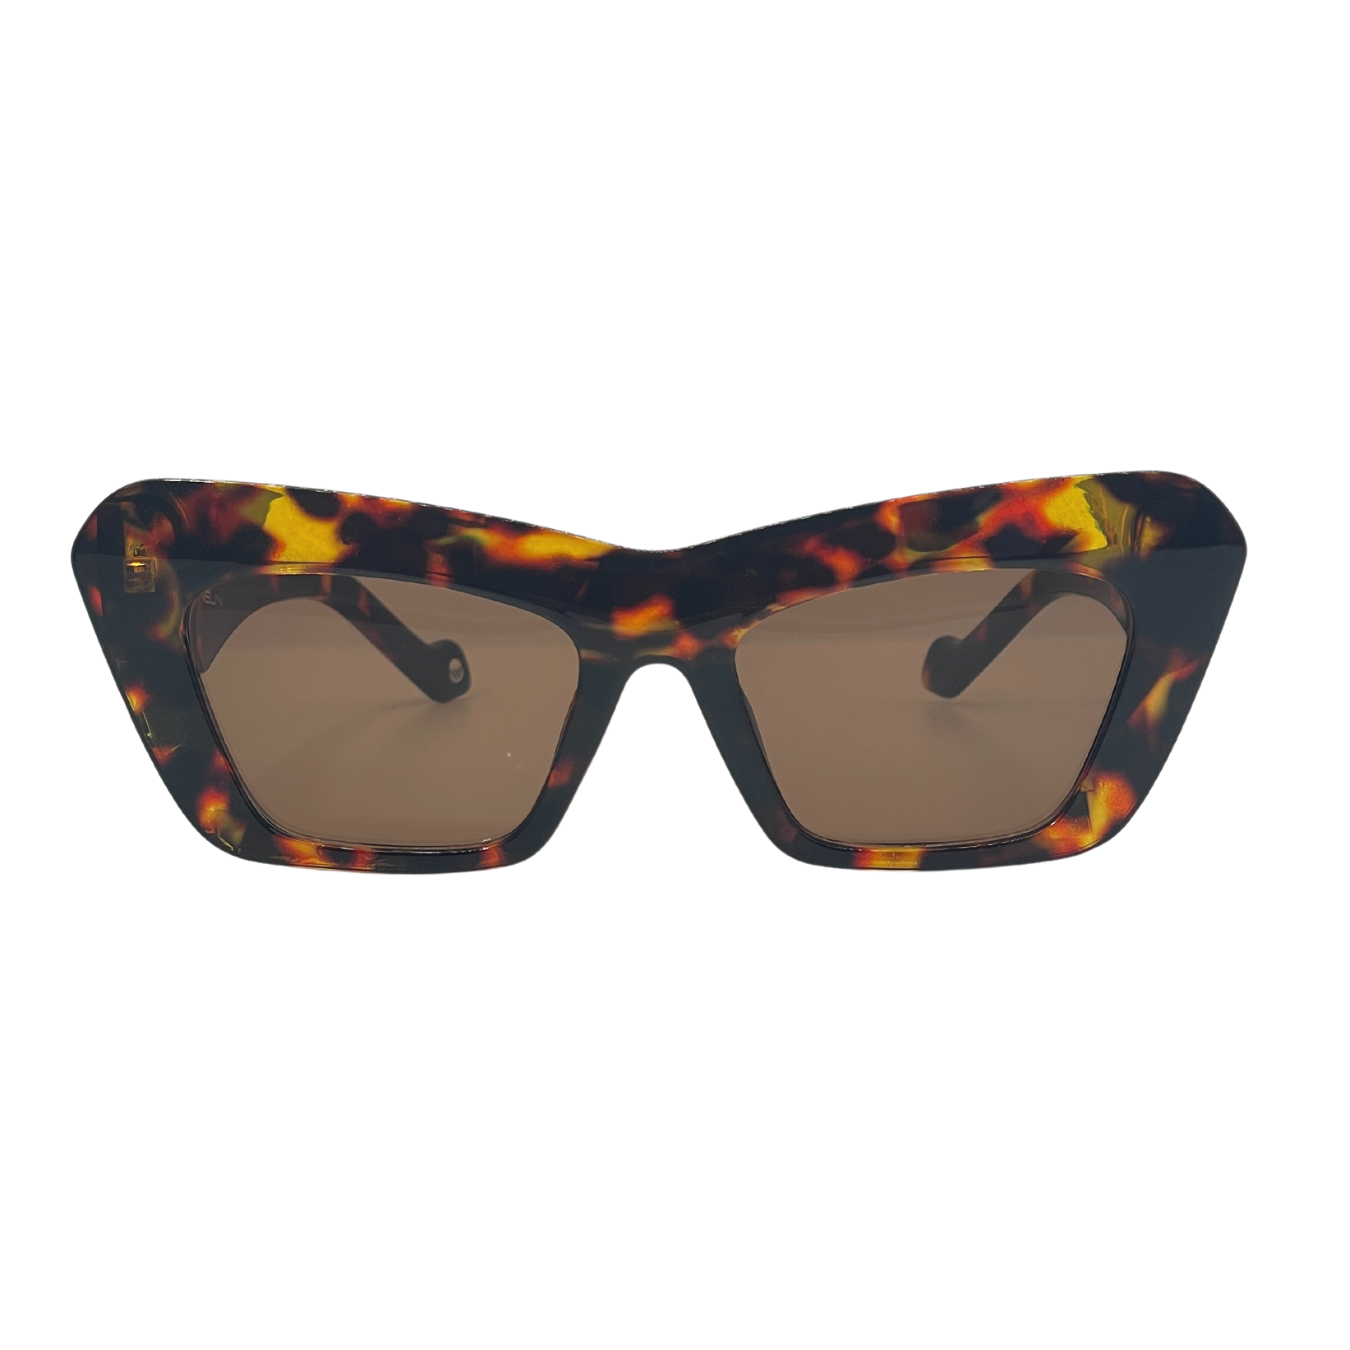 Brickell - Cat Eye Sunglasses - Woodensun Sunglasses | Eco-fashion eyewear